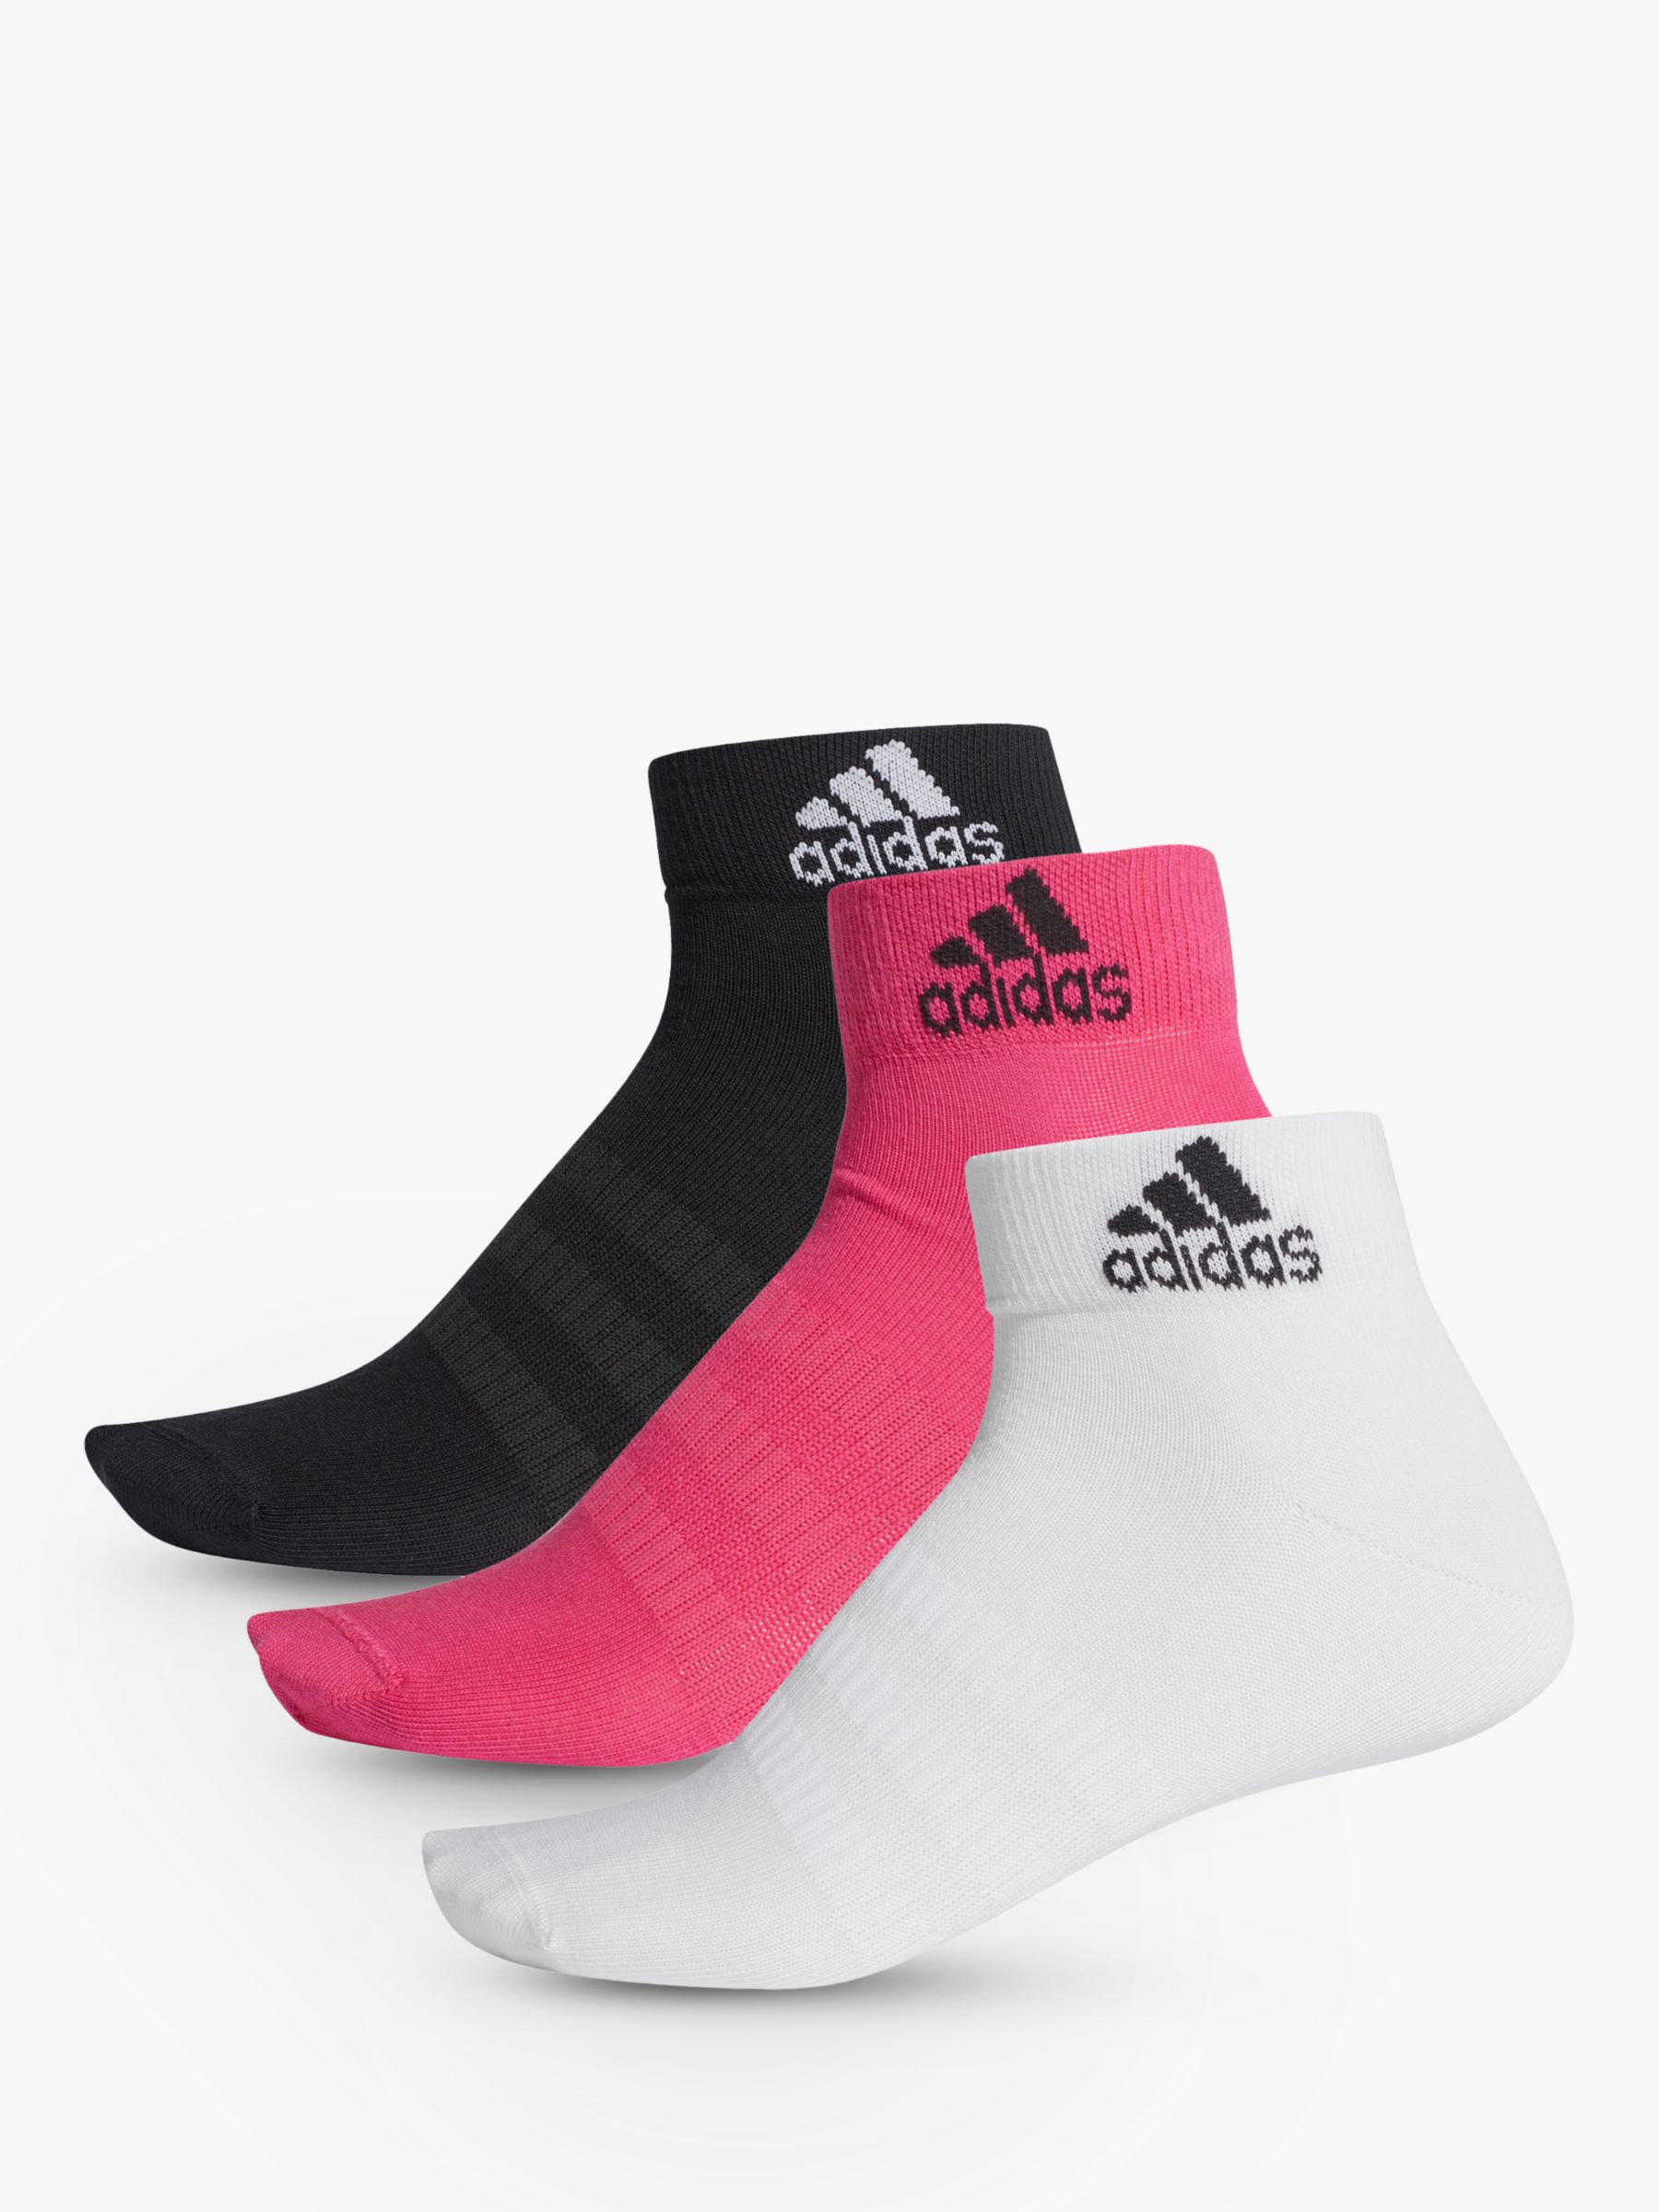 adidas Light Training Ankle Socks, Pack of 3